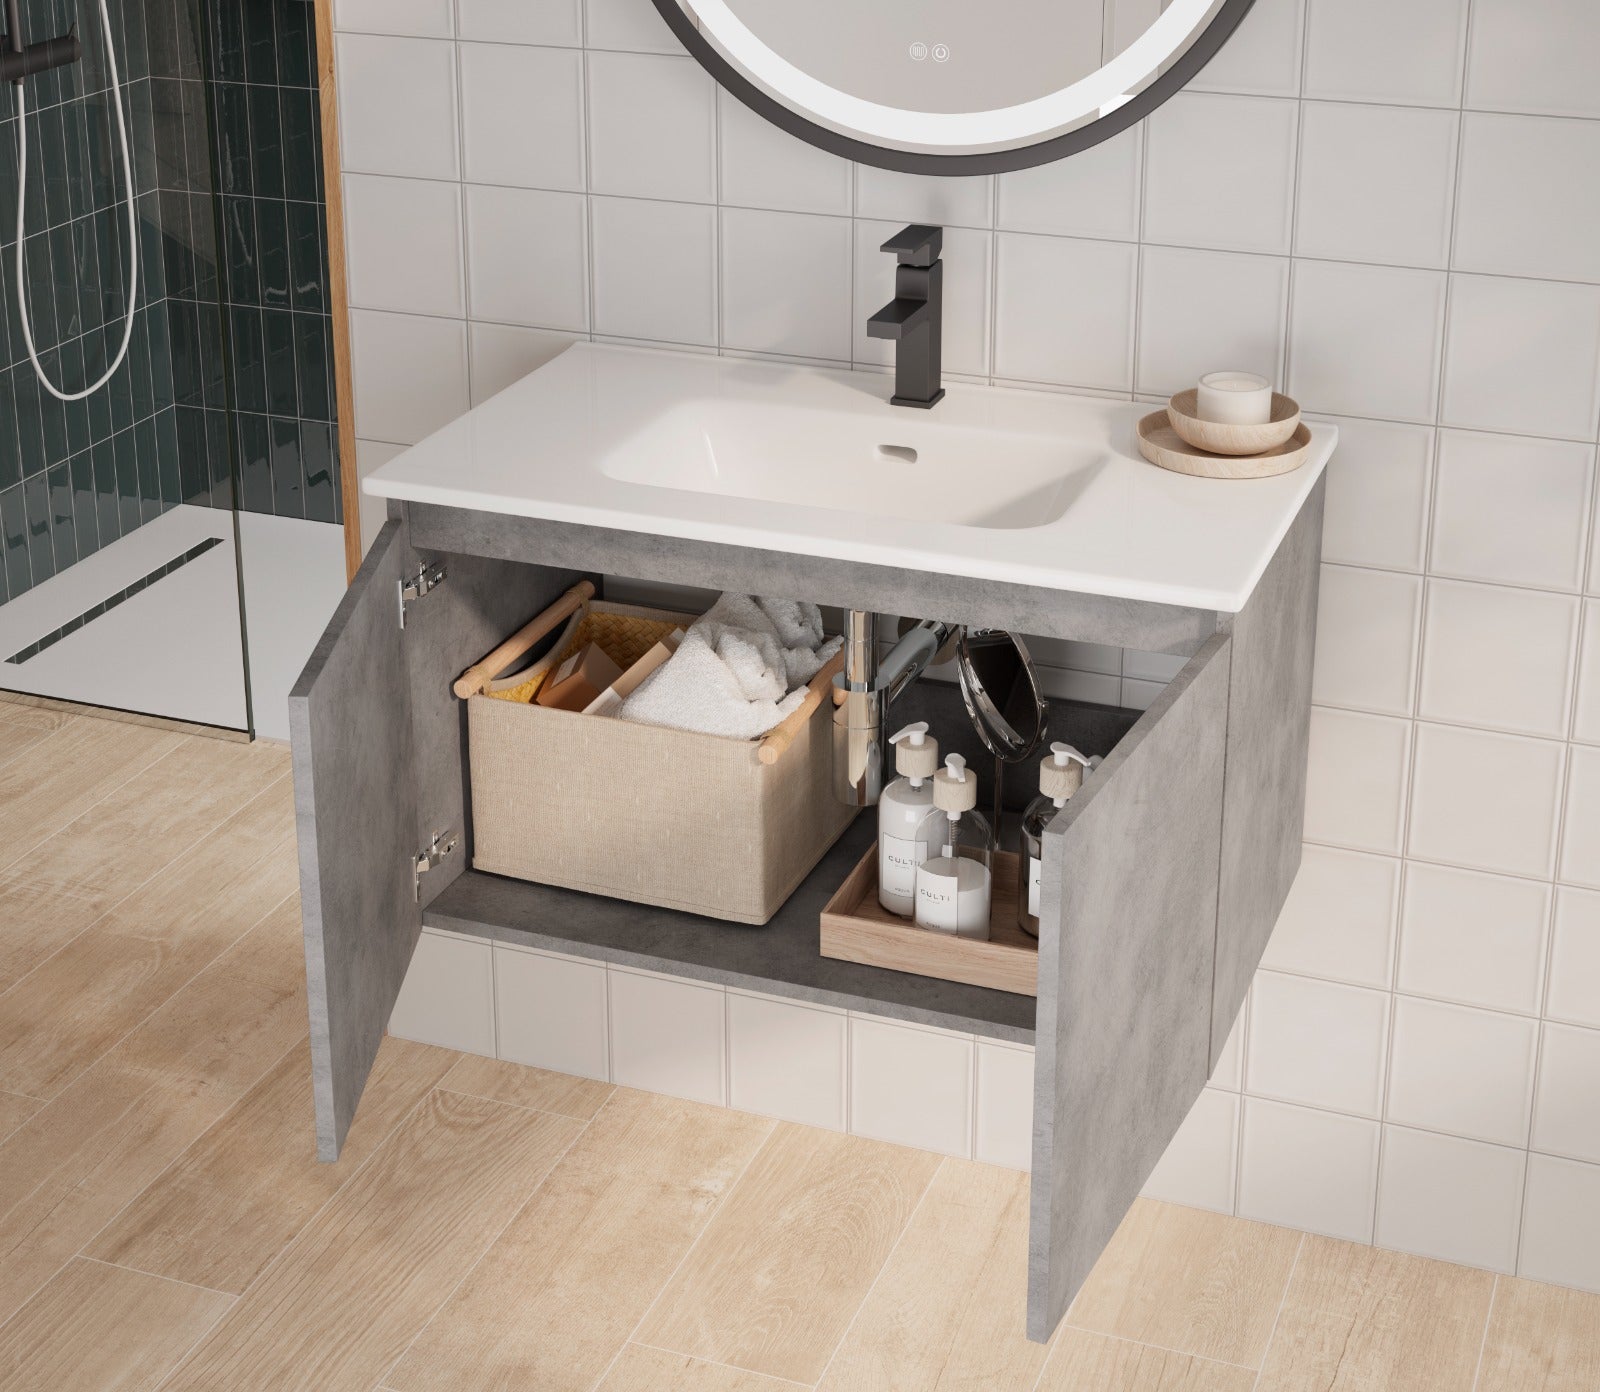 DAX Malibu Bathroom Vanity Cabinet with Ceramic Basin Included